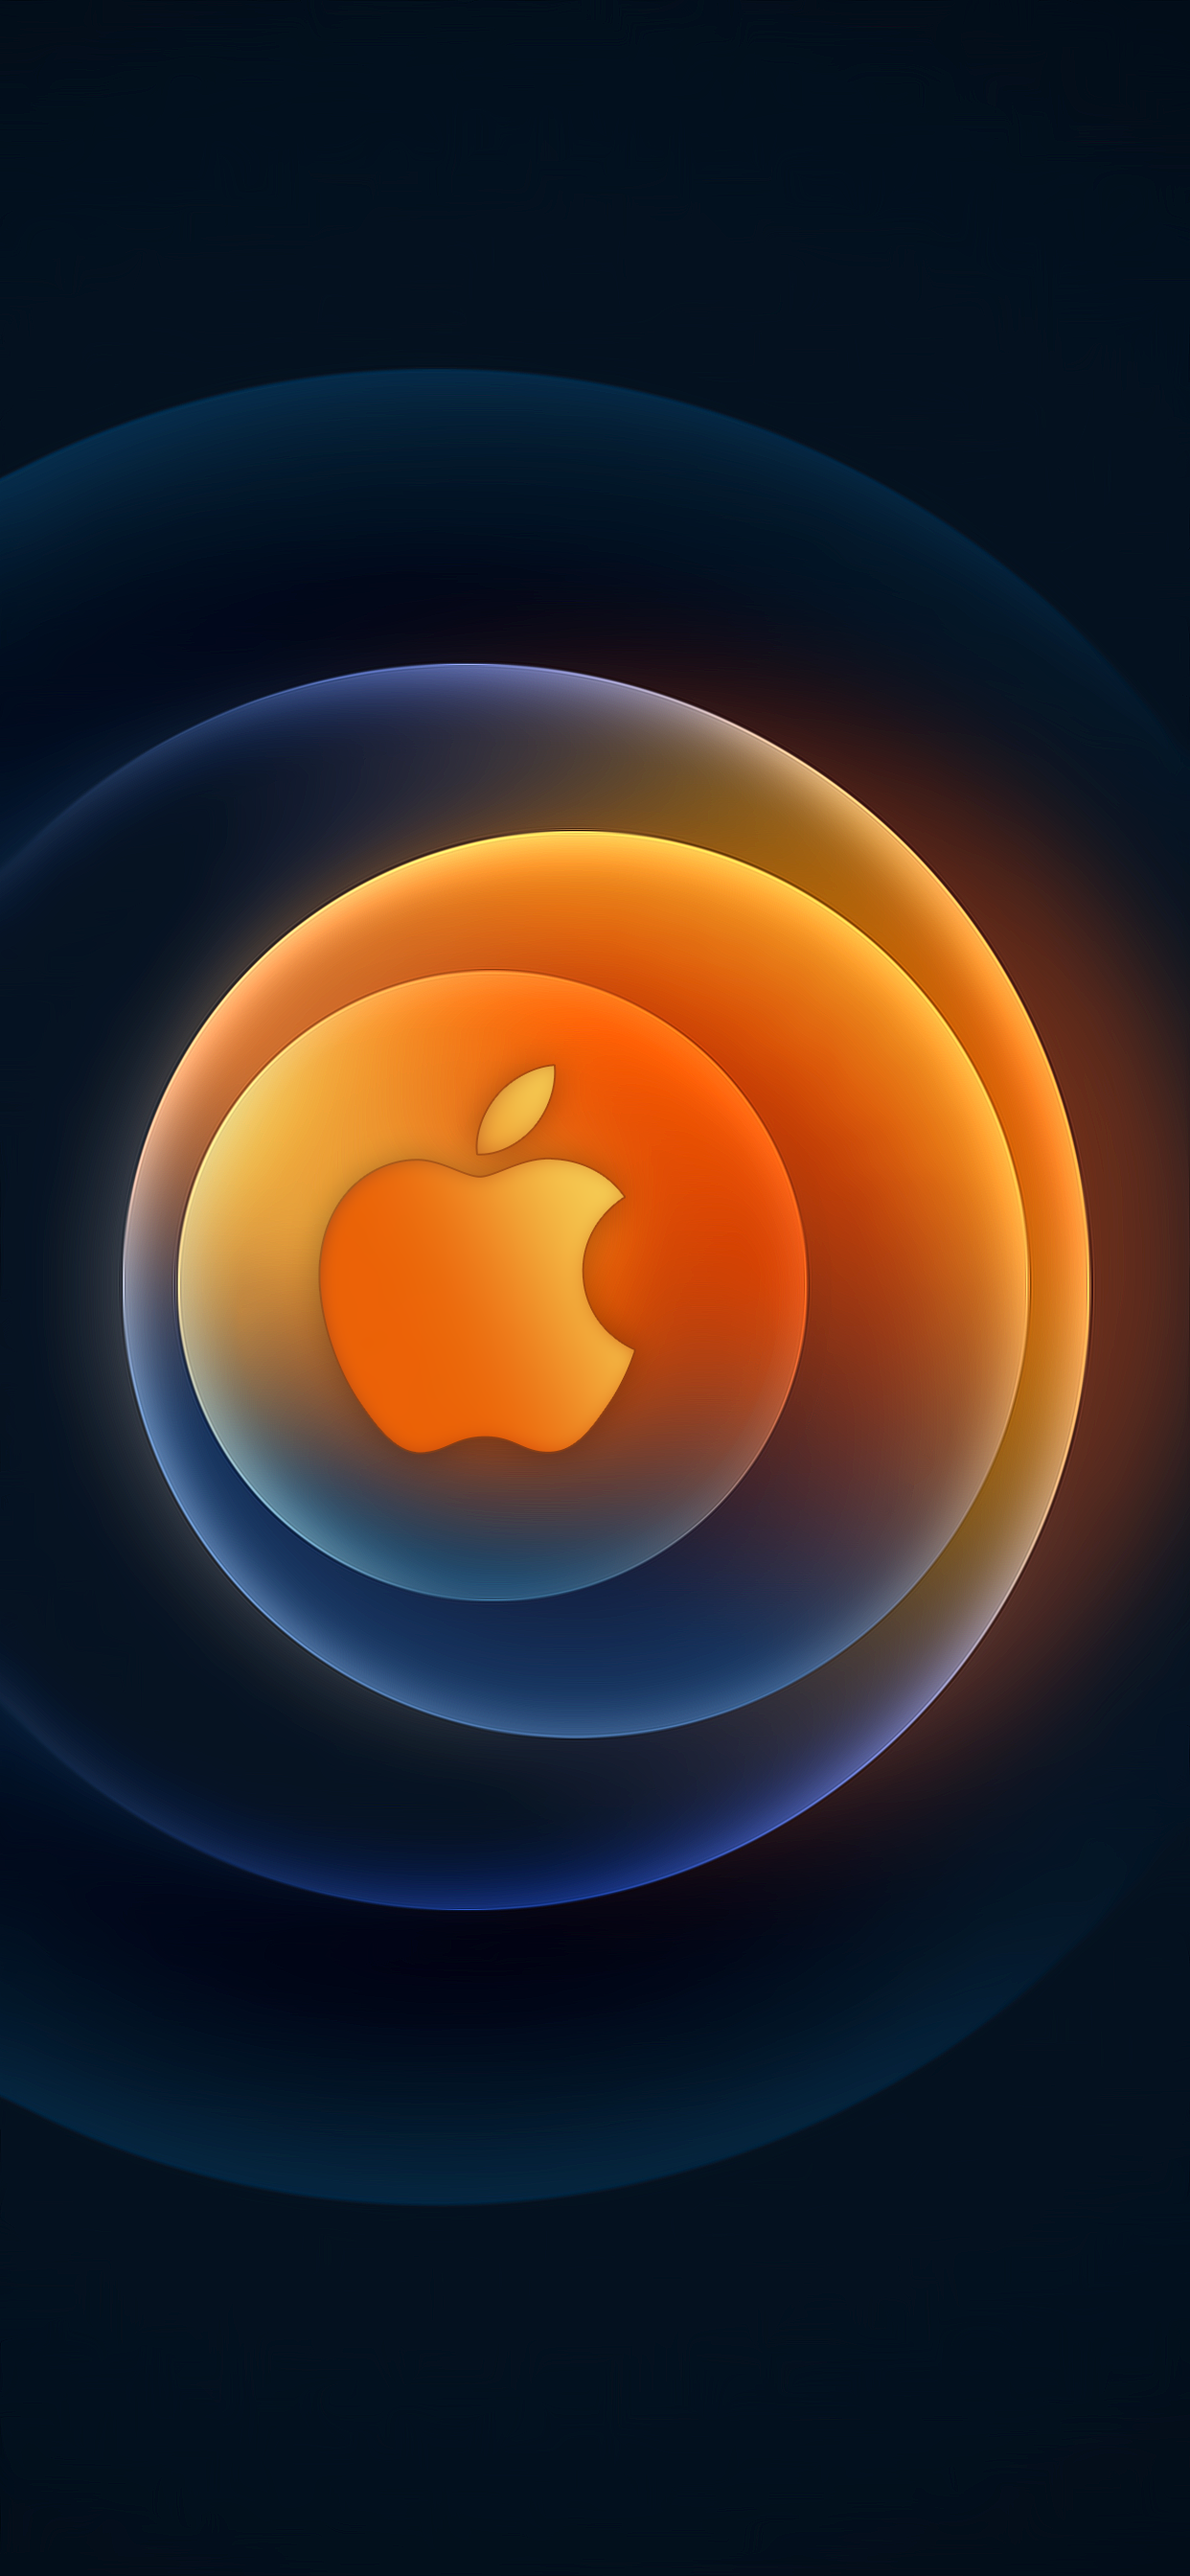  Apple IPhone Hintergrundbild 1242x2688. iPhone 12 Keynote: Wallpaper zum „Hi, Speed“-Event als Download › Macerkopf